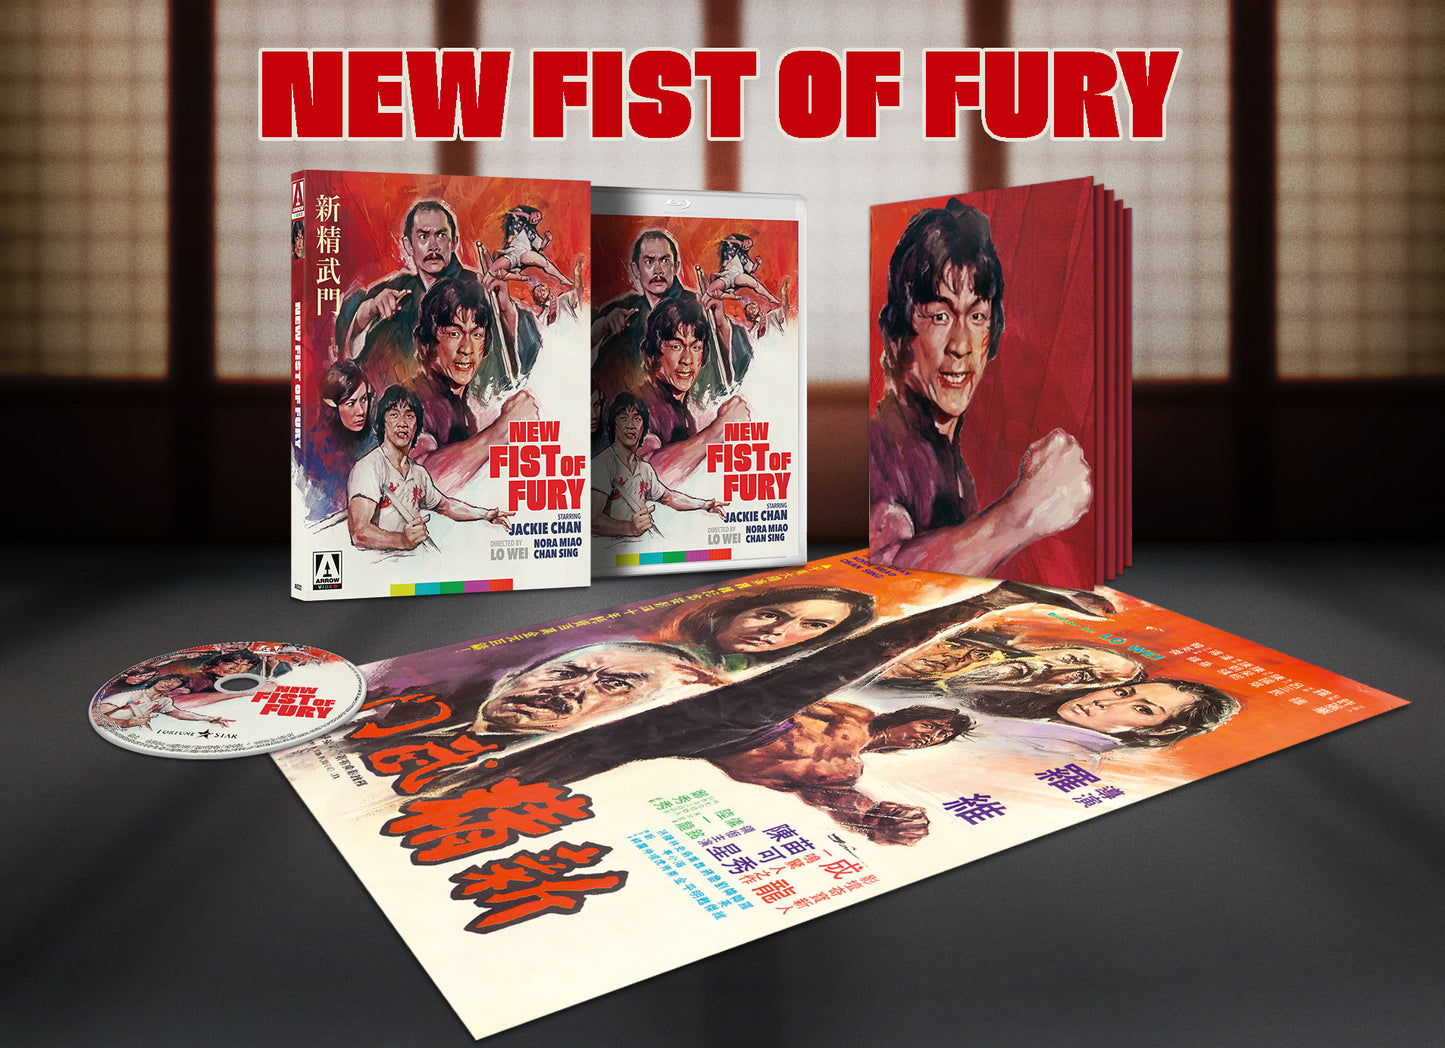 New Fist of Fury Limited Edition Blu-ray (Arrow/U.S.)